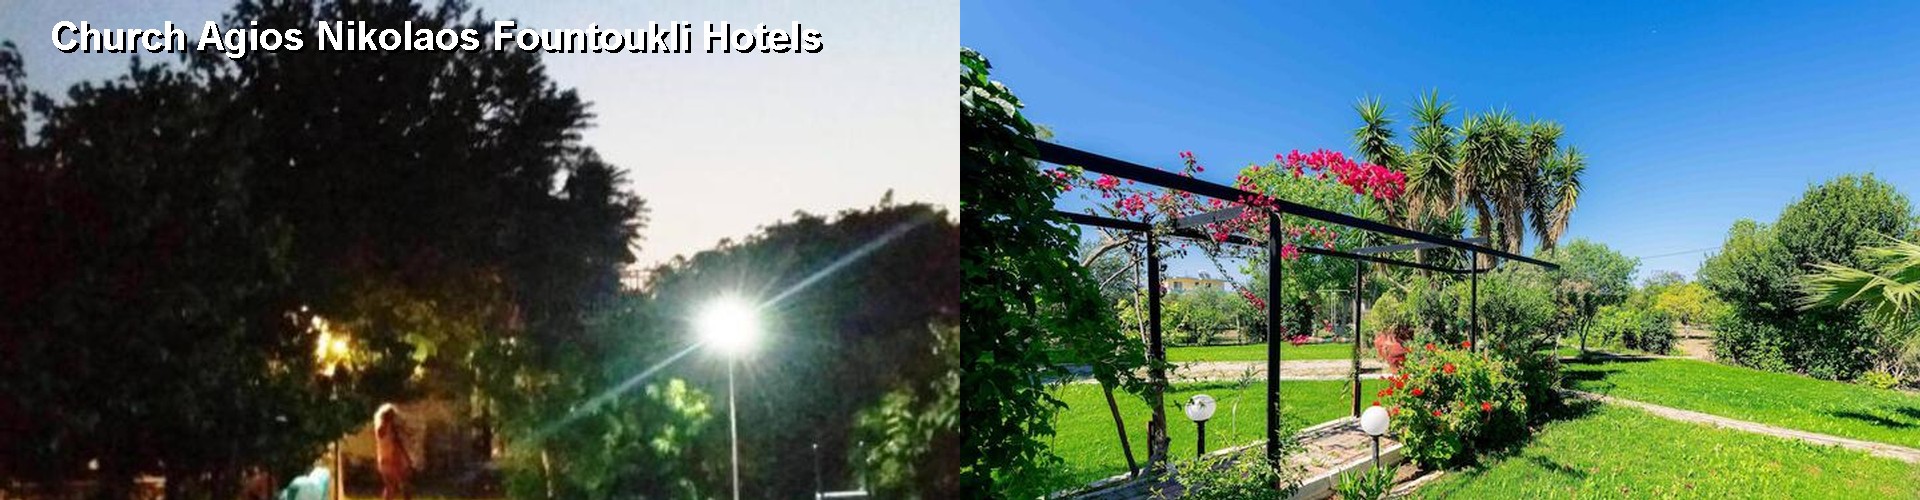 5 Best Hotels near Church Agios Nikolaos Fountoukli